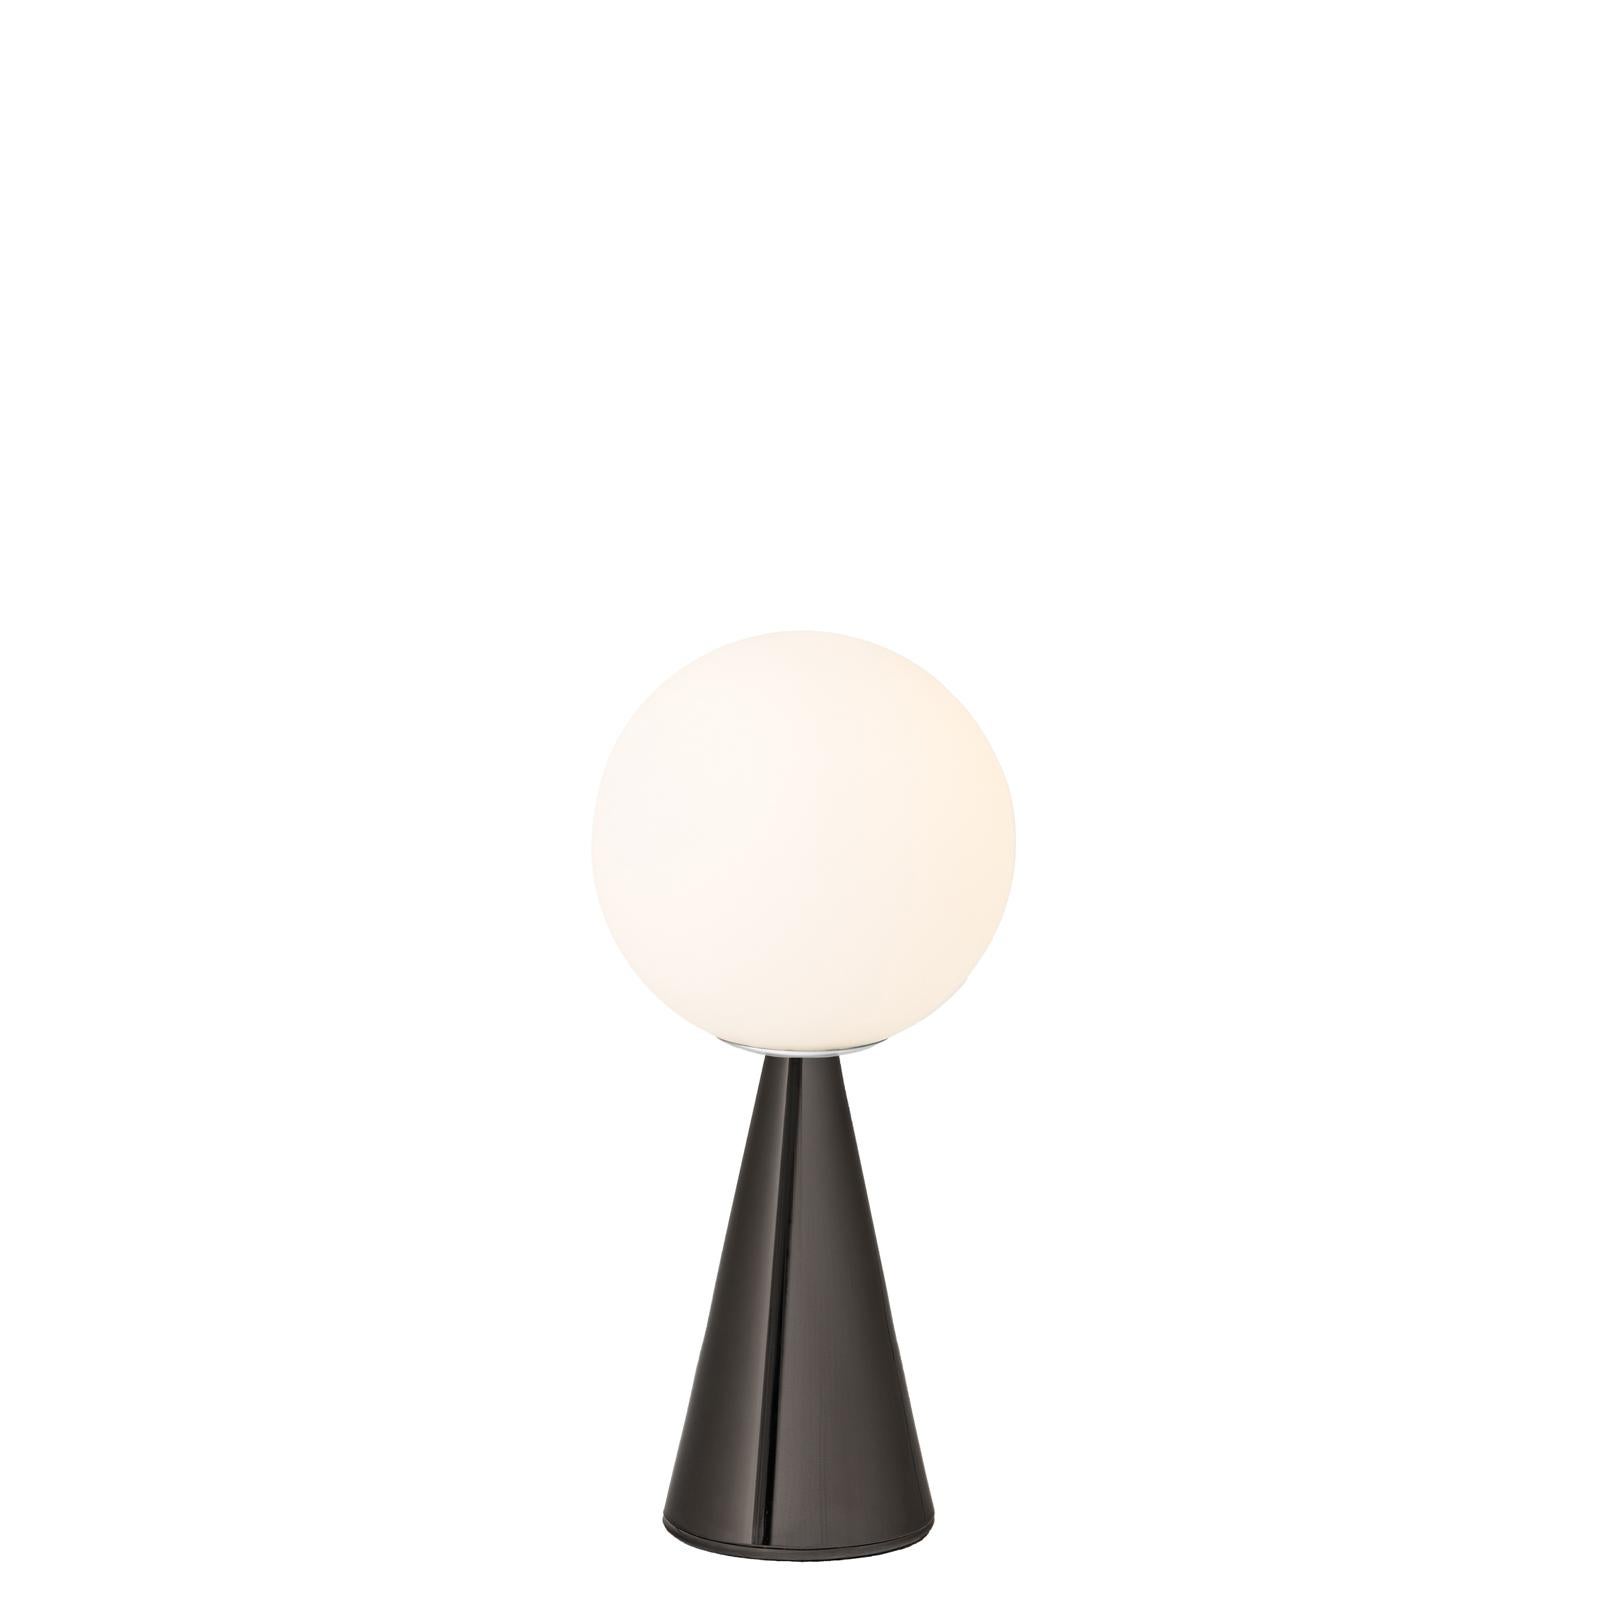 Brushed Gio Ponti 'Bilia' Table Lamp in Nickel for Fontana Arte